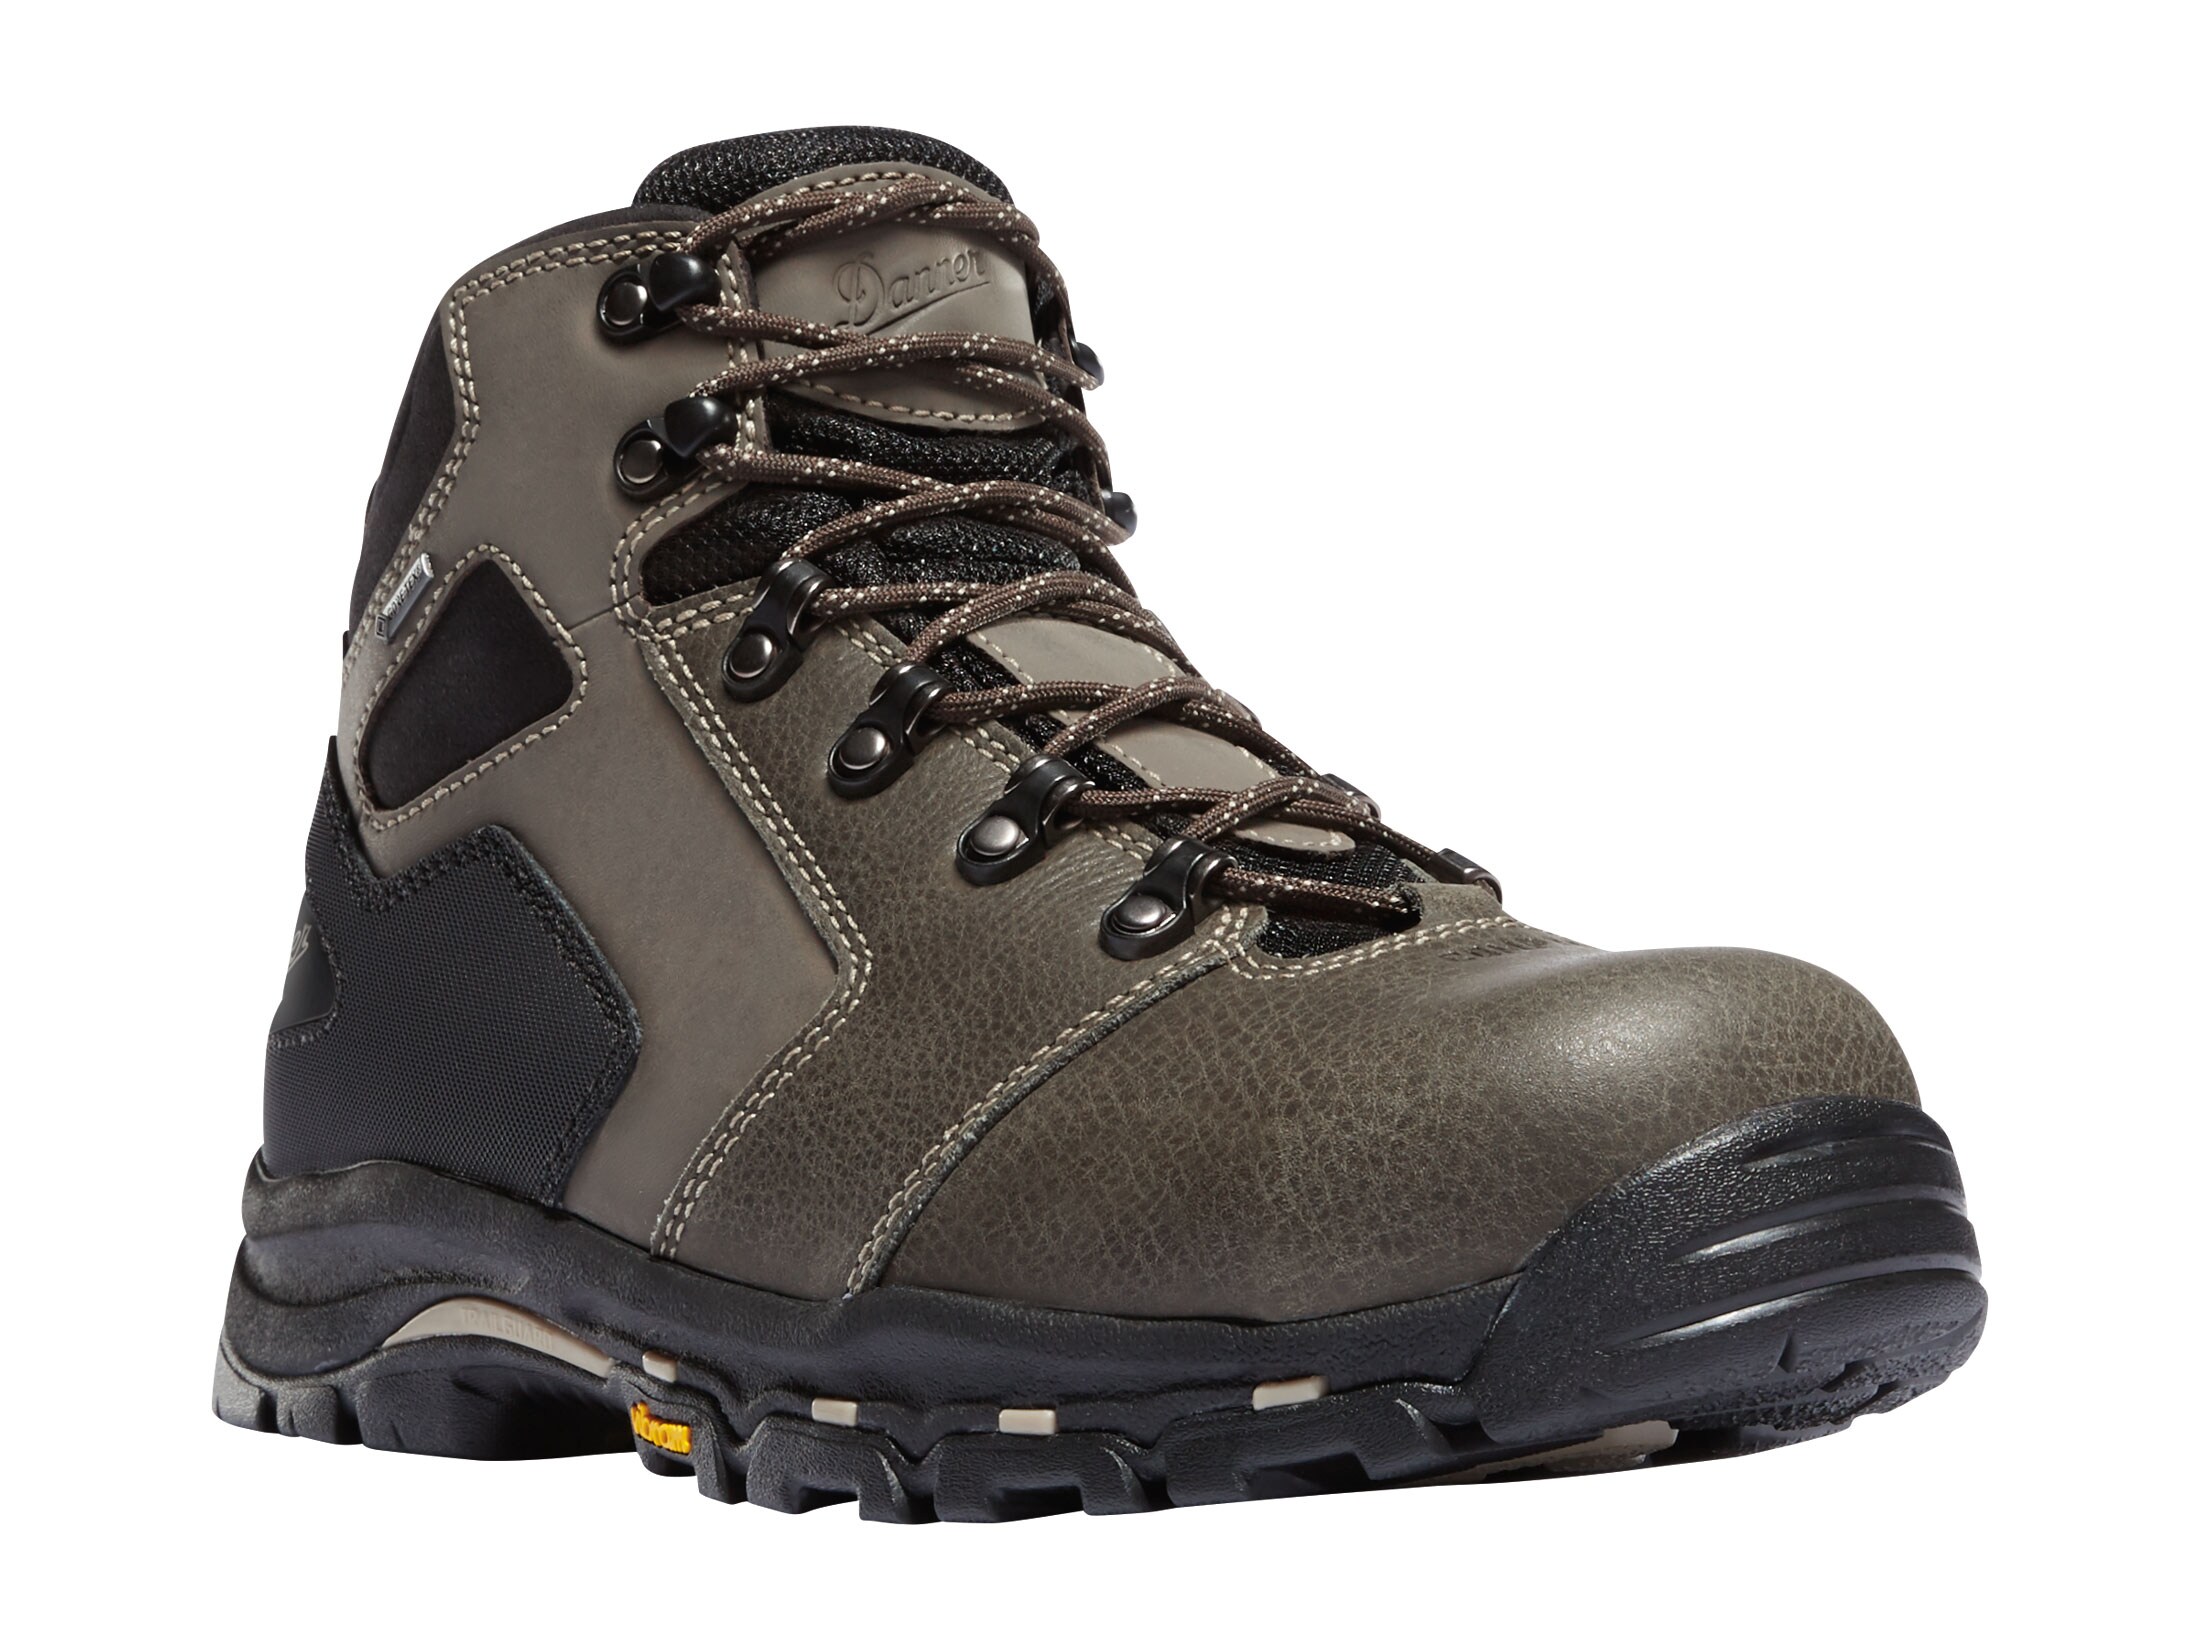 Danner Vicious 4.5 GORE-TEX Non-Metallic Toe Work Boots Leather